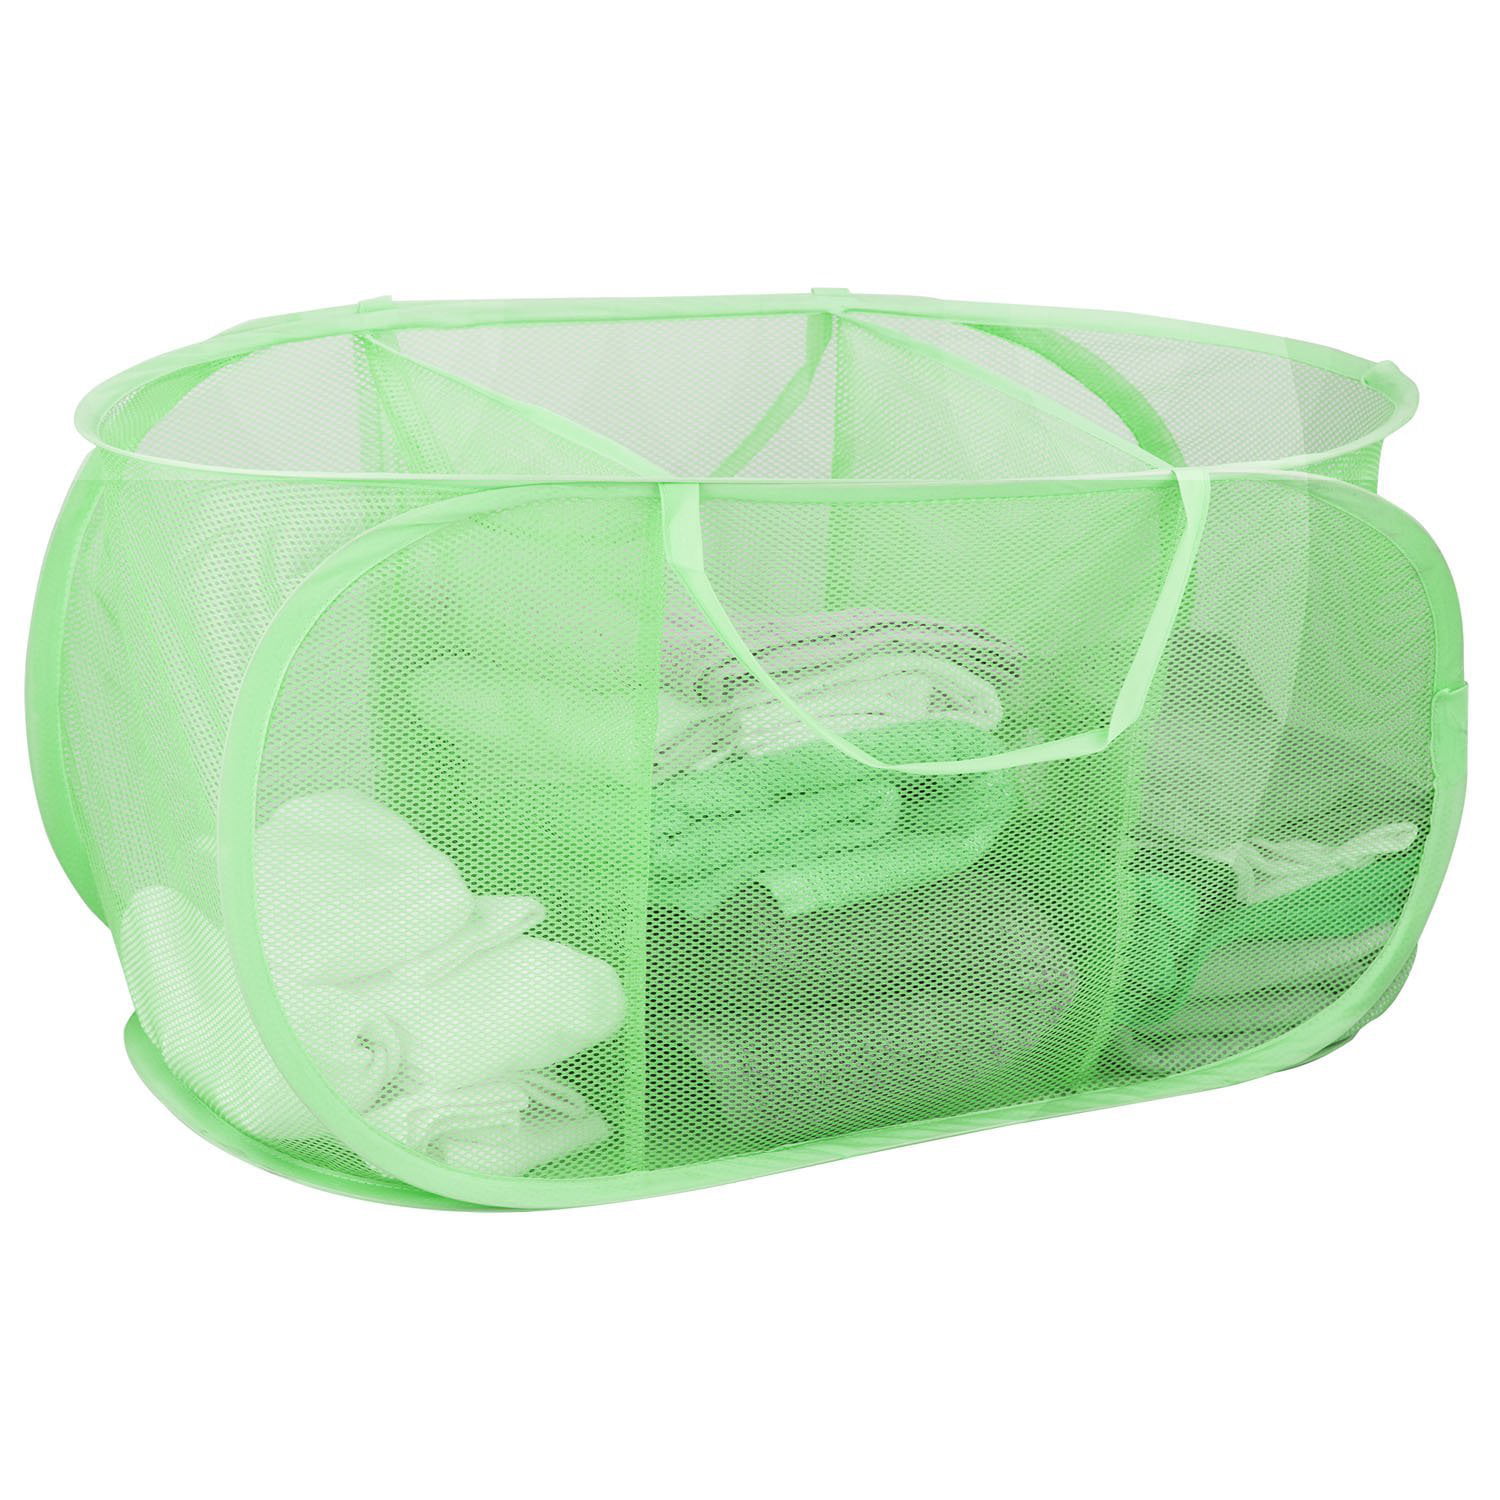 3 compartment laundry basket